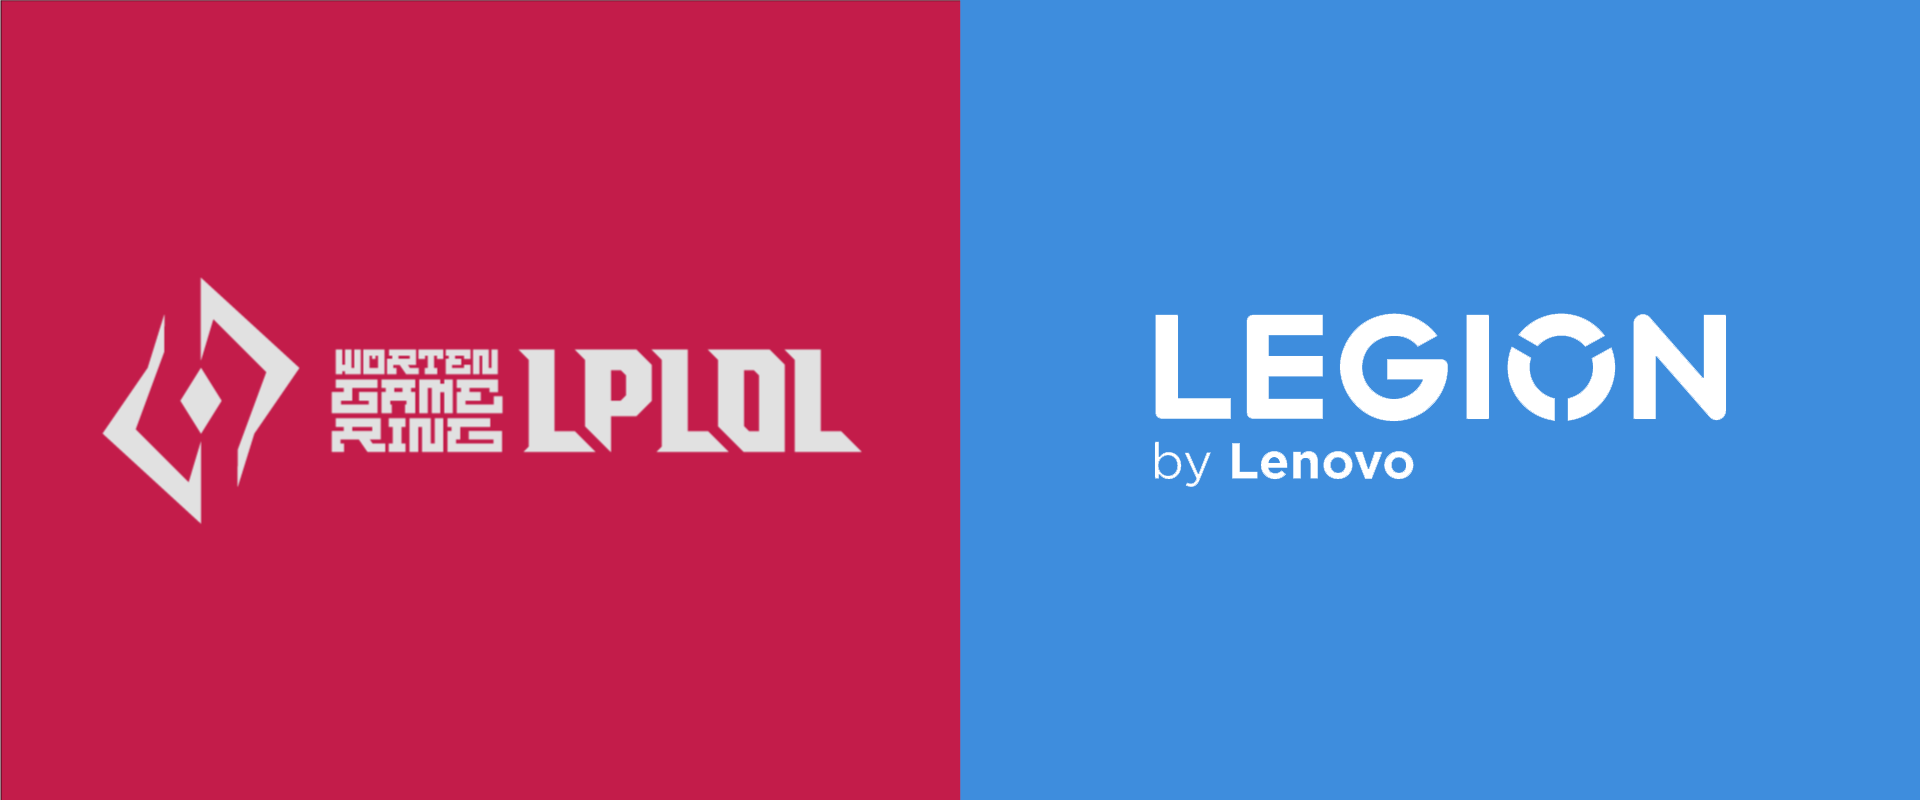 A Legion by Lenovo é a nova parceira da INYGON